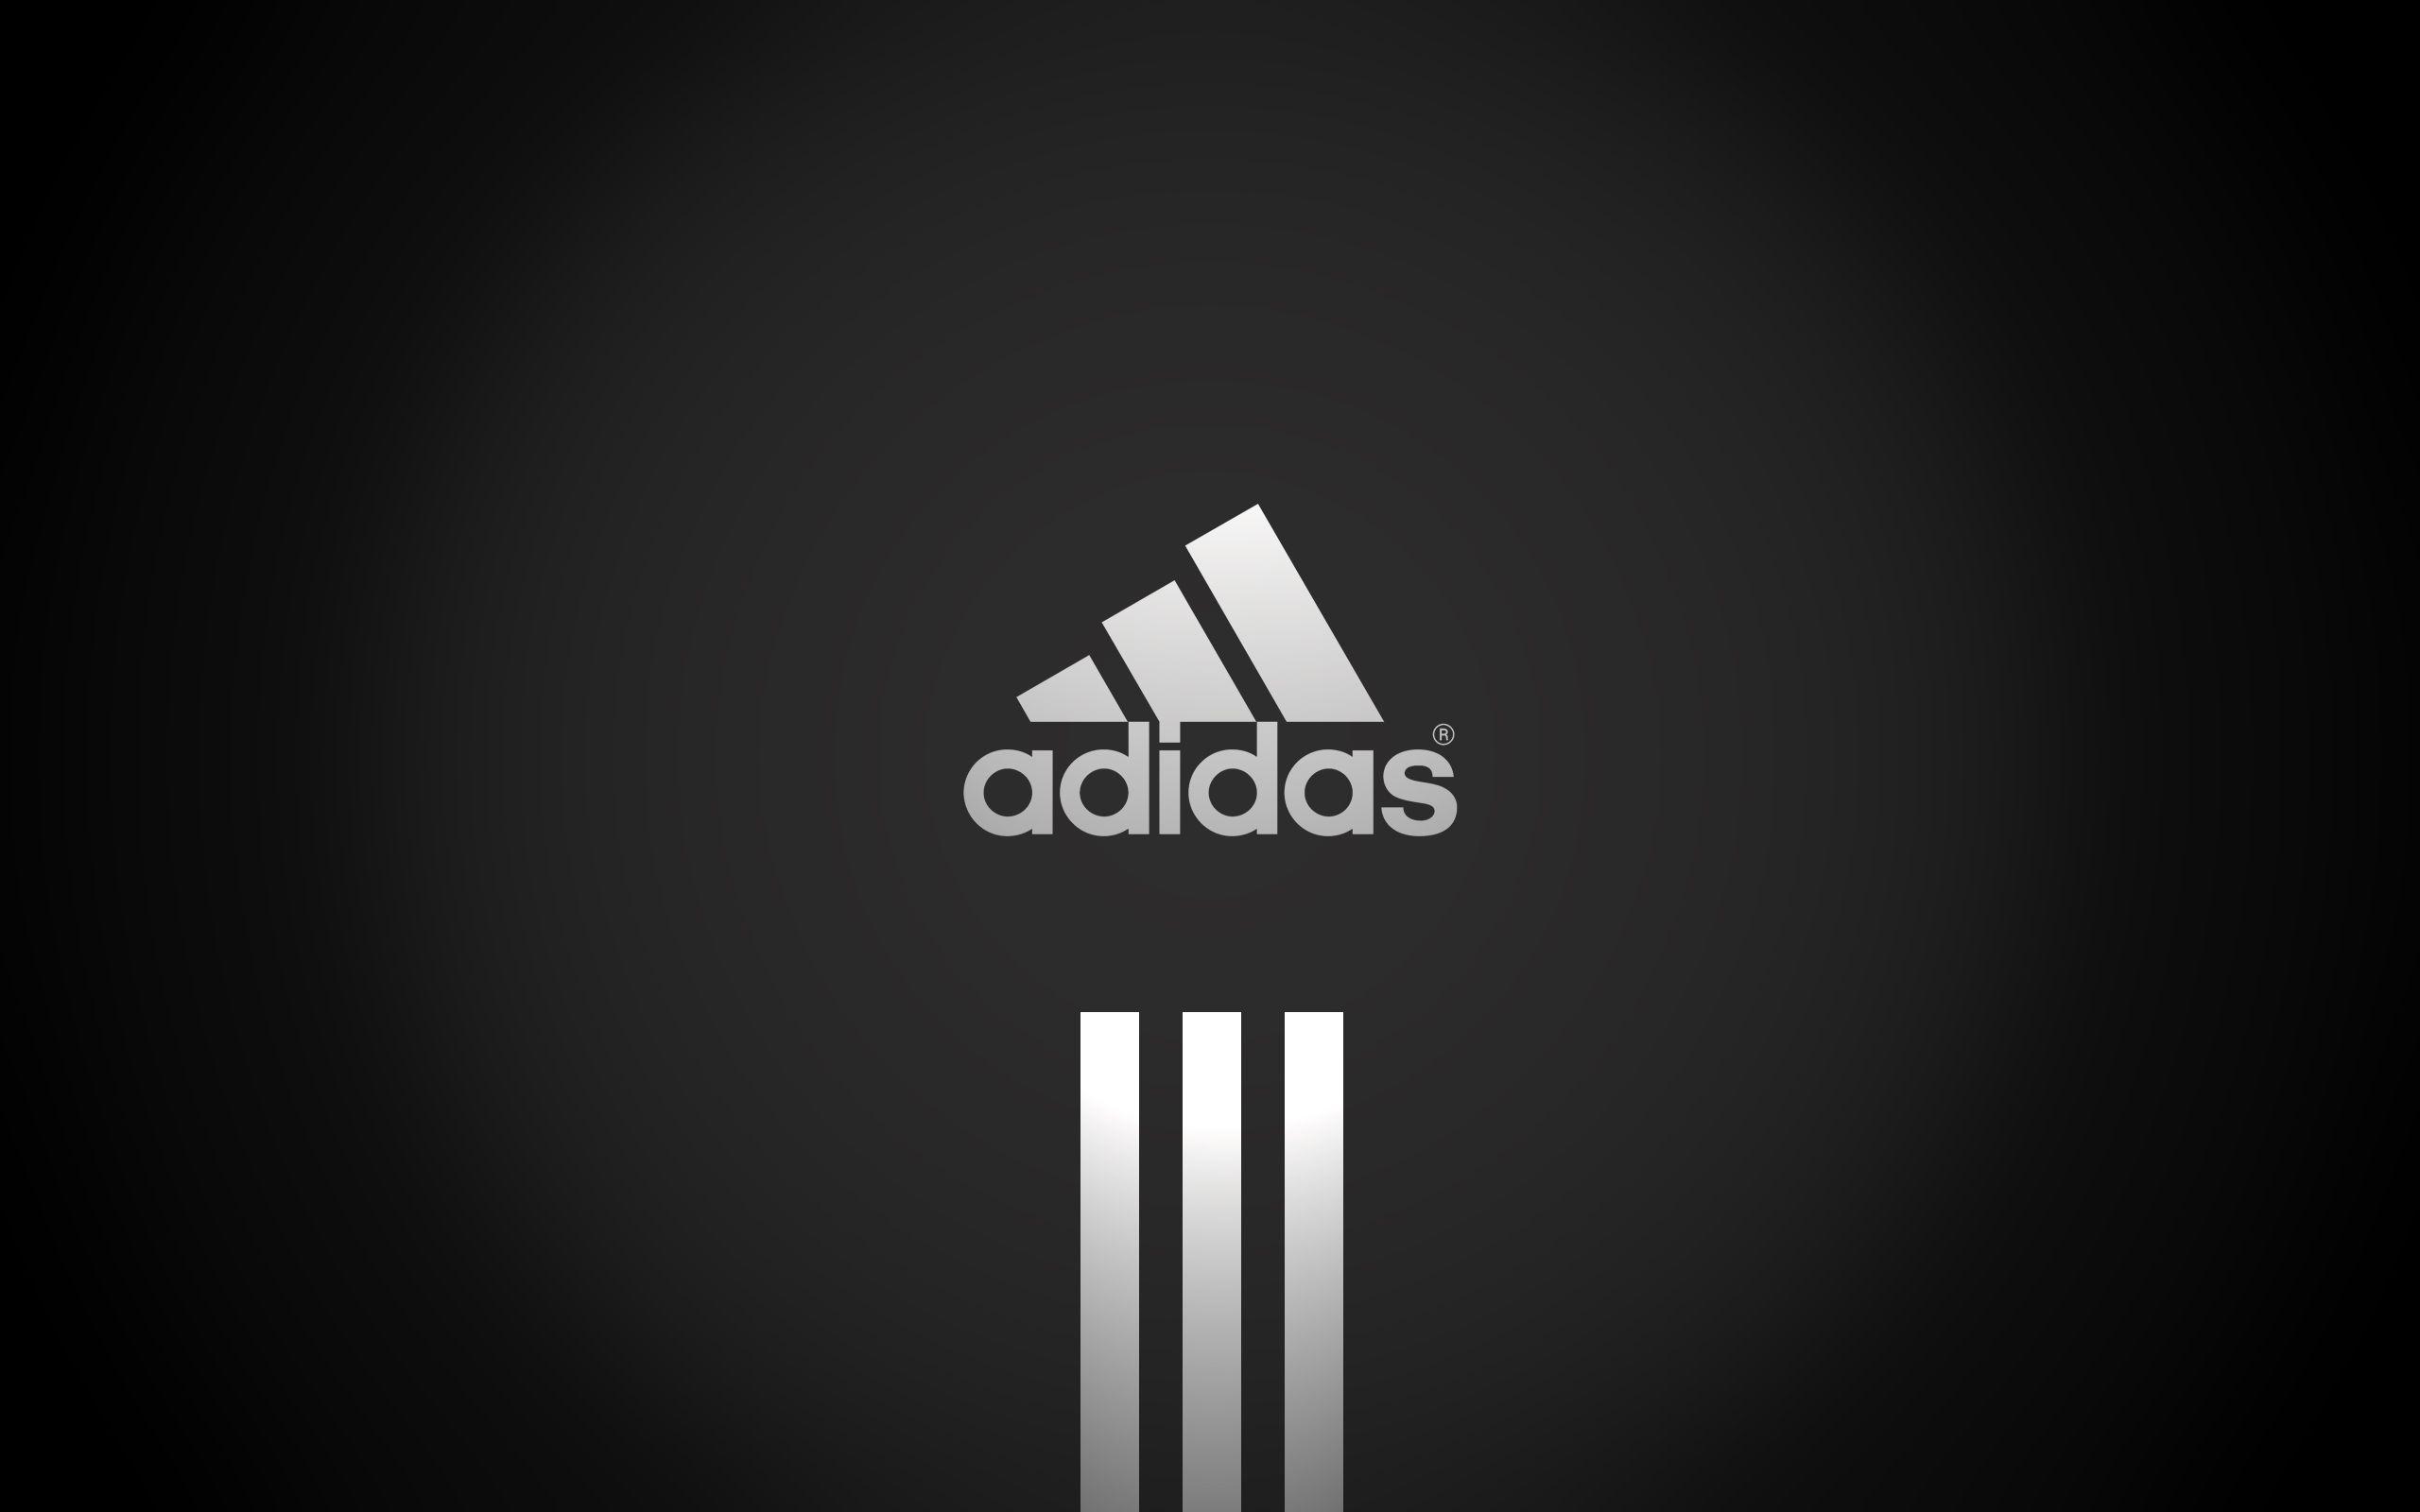 Adidas Logo Wide Wallpaper 8928 2560x1600 px